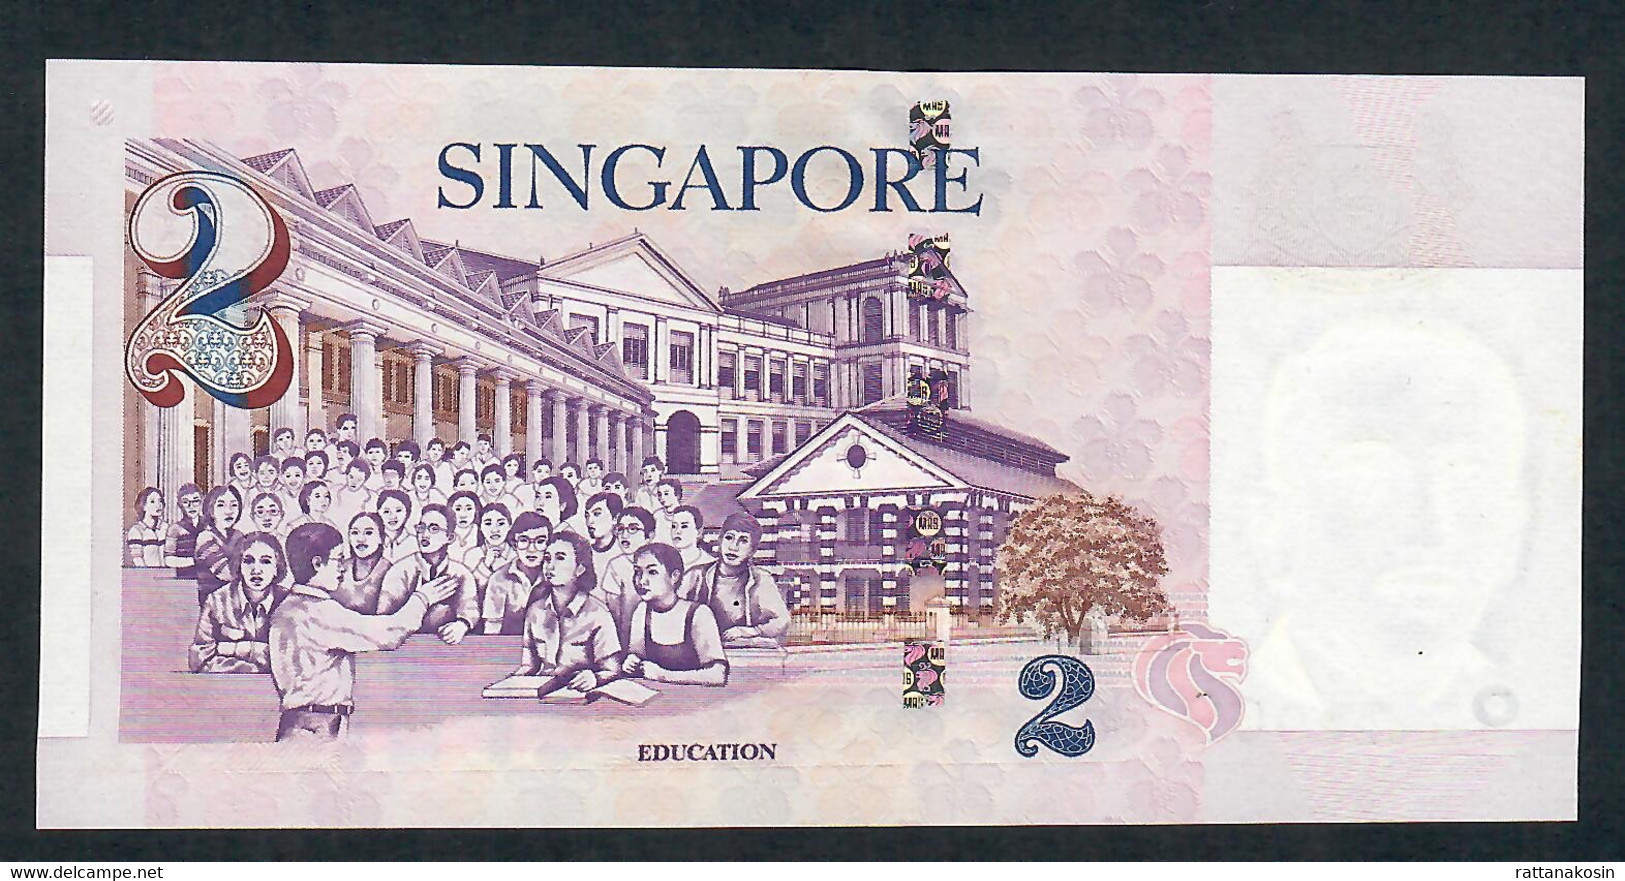 SINGAPORE P38 2 DOLLARS 1999 #OCL  UNC. - Singapore